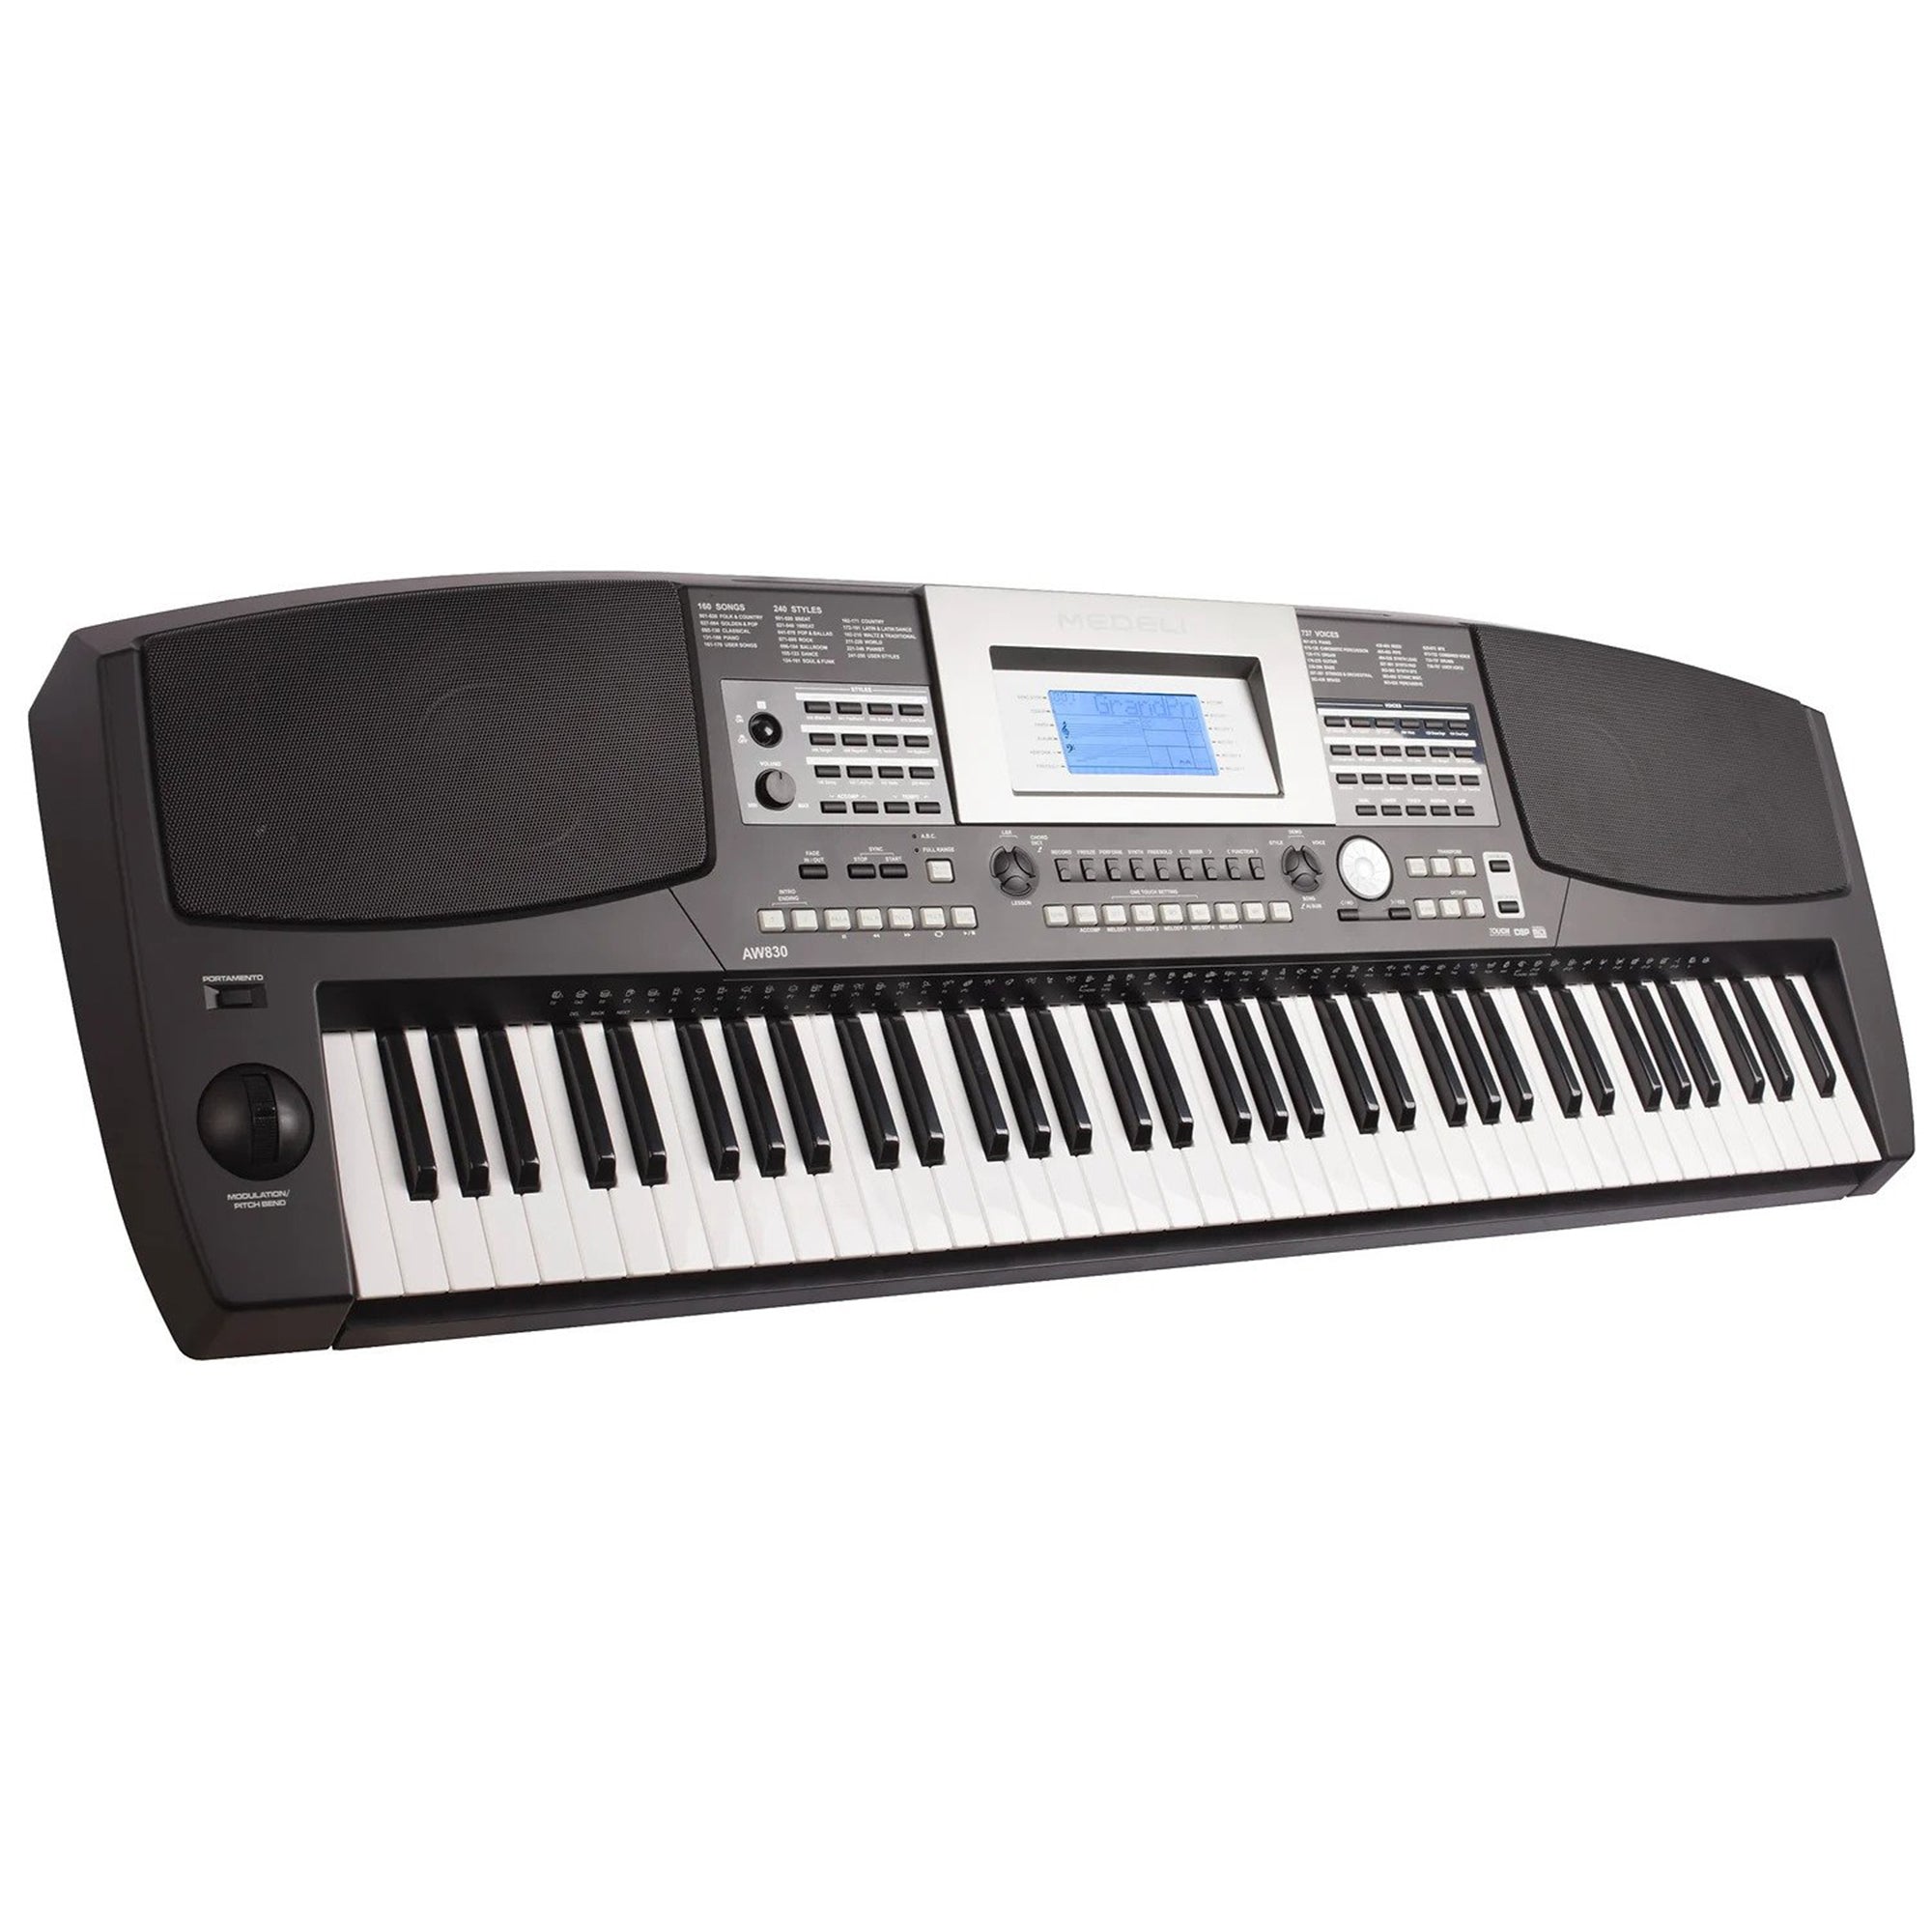 Buy Music Keyboard